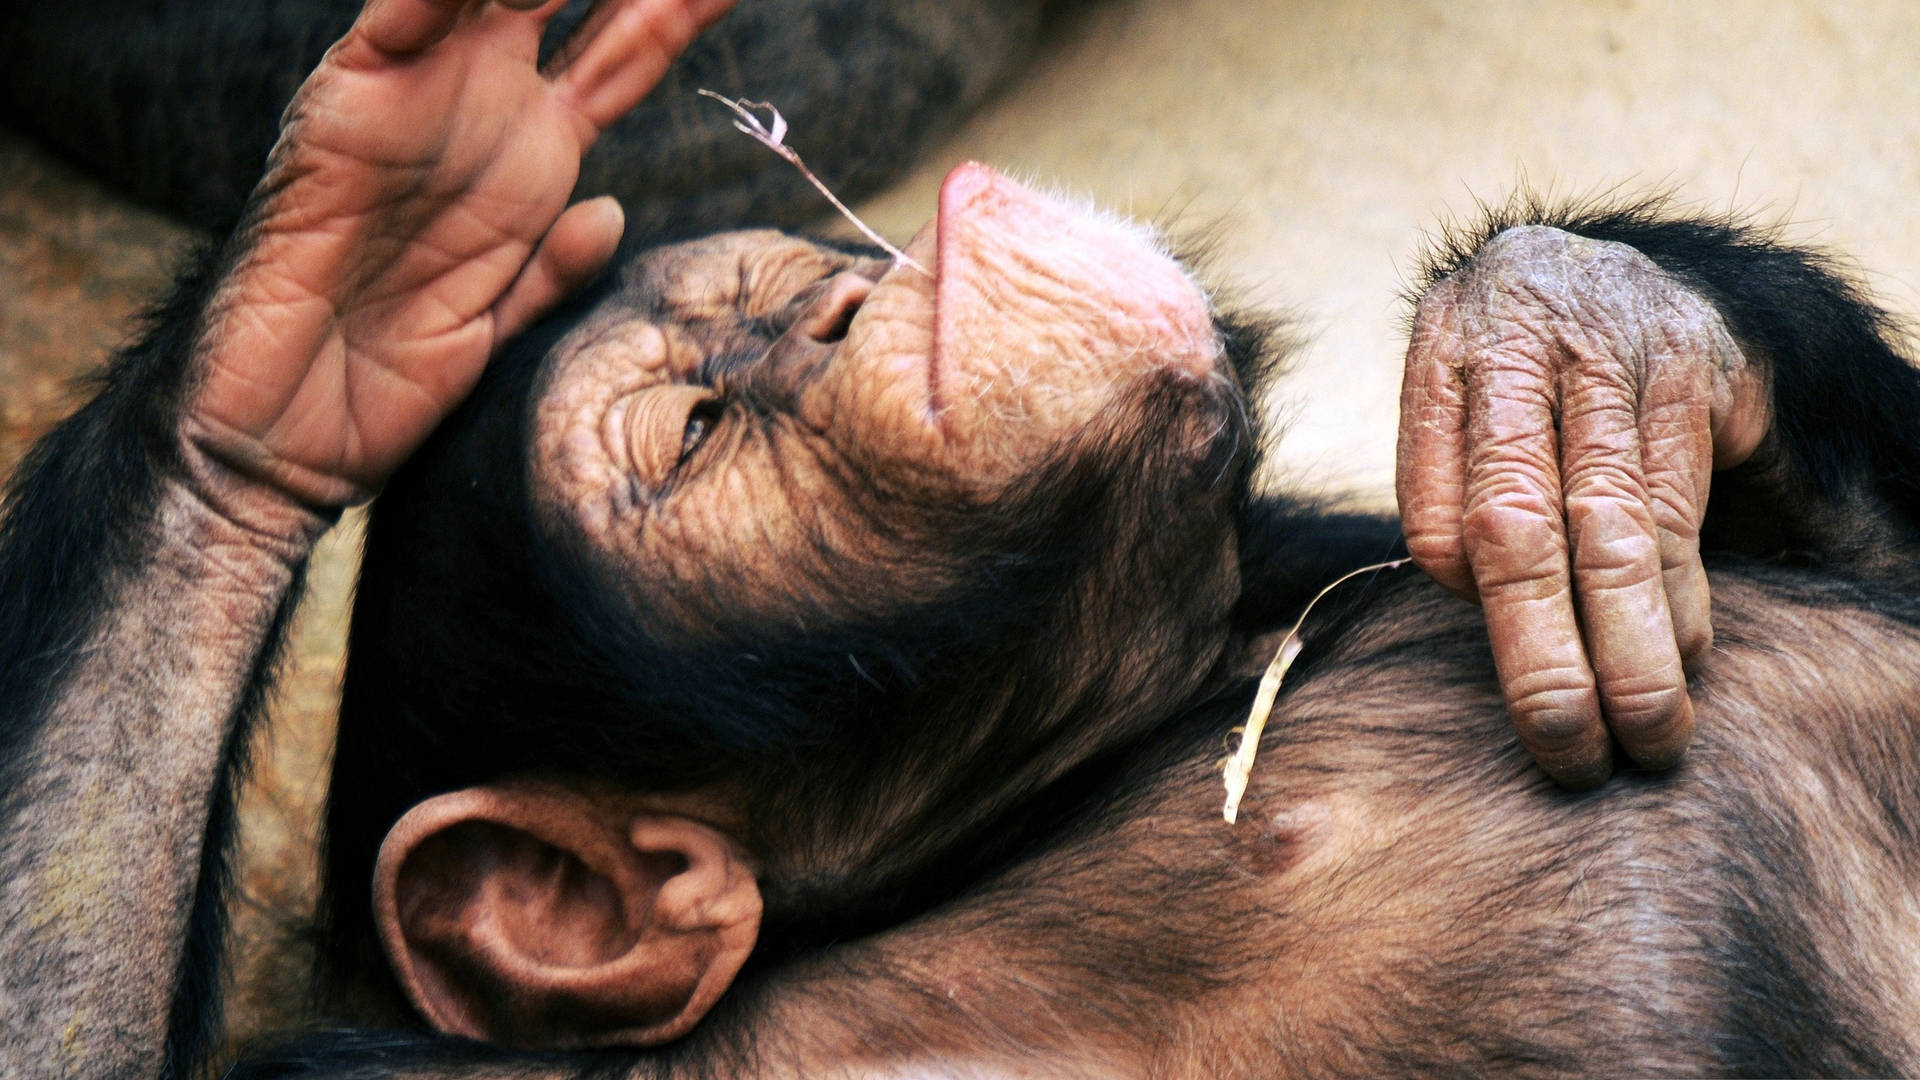 Peaceful Sleeping Chimpanzee Wallpaper